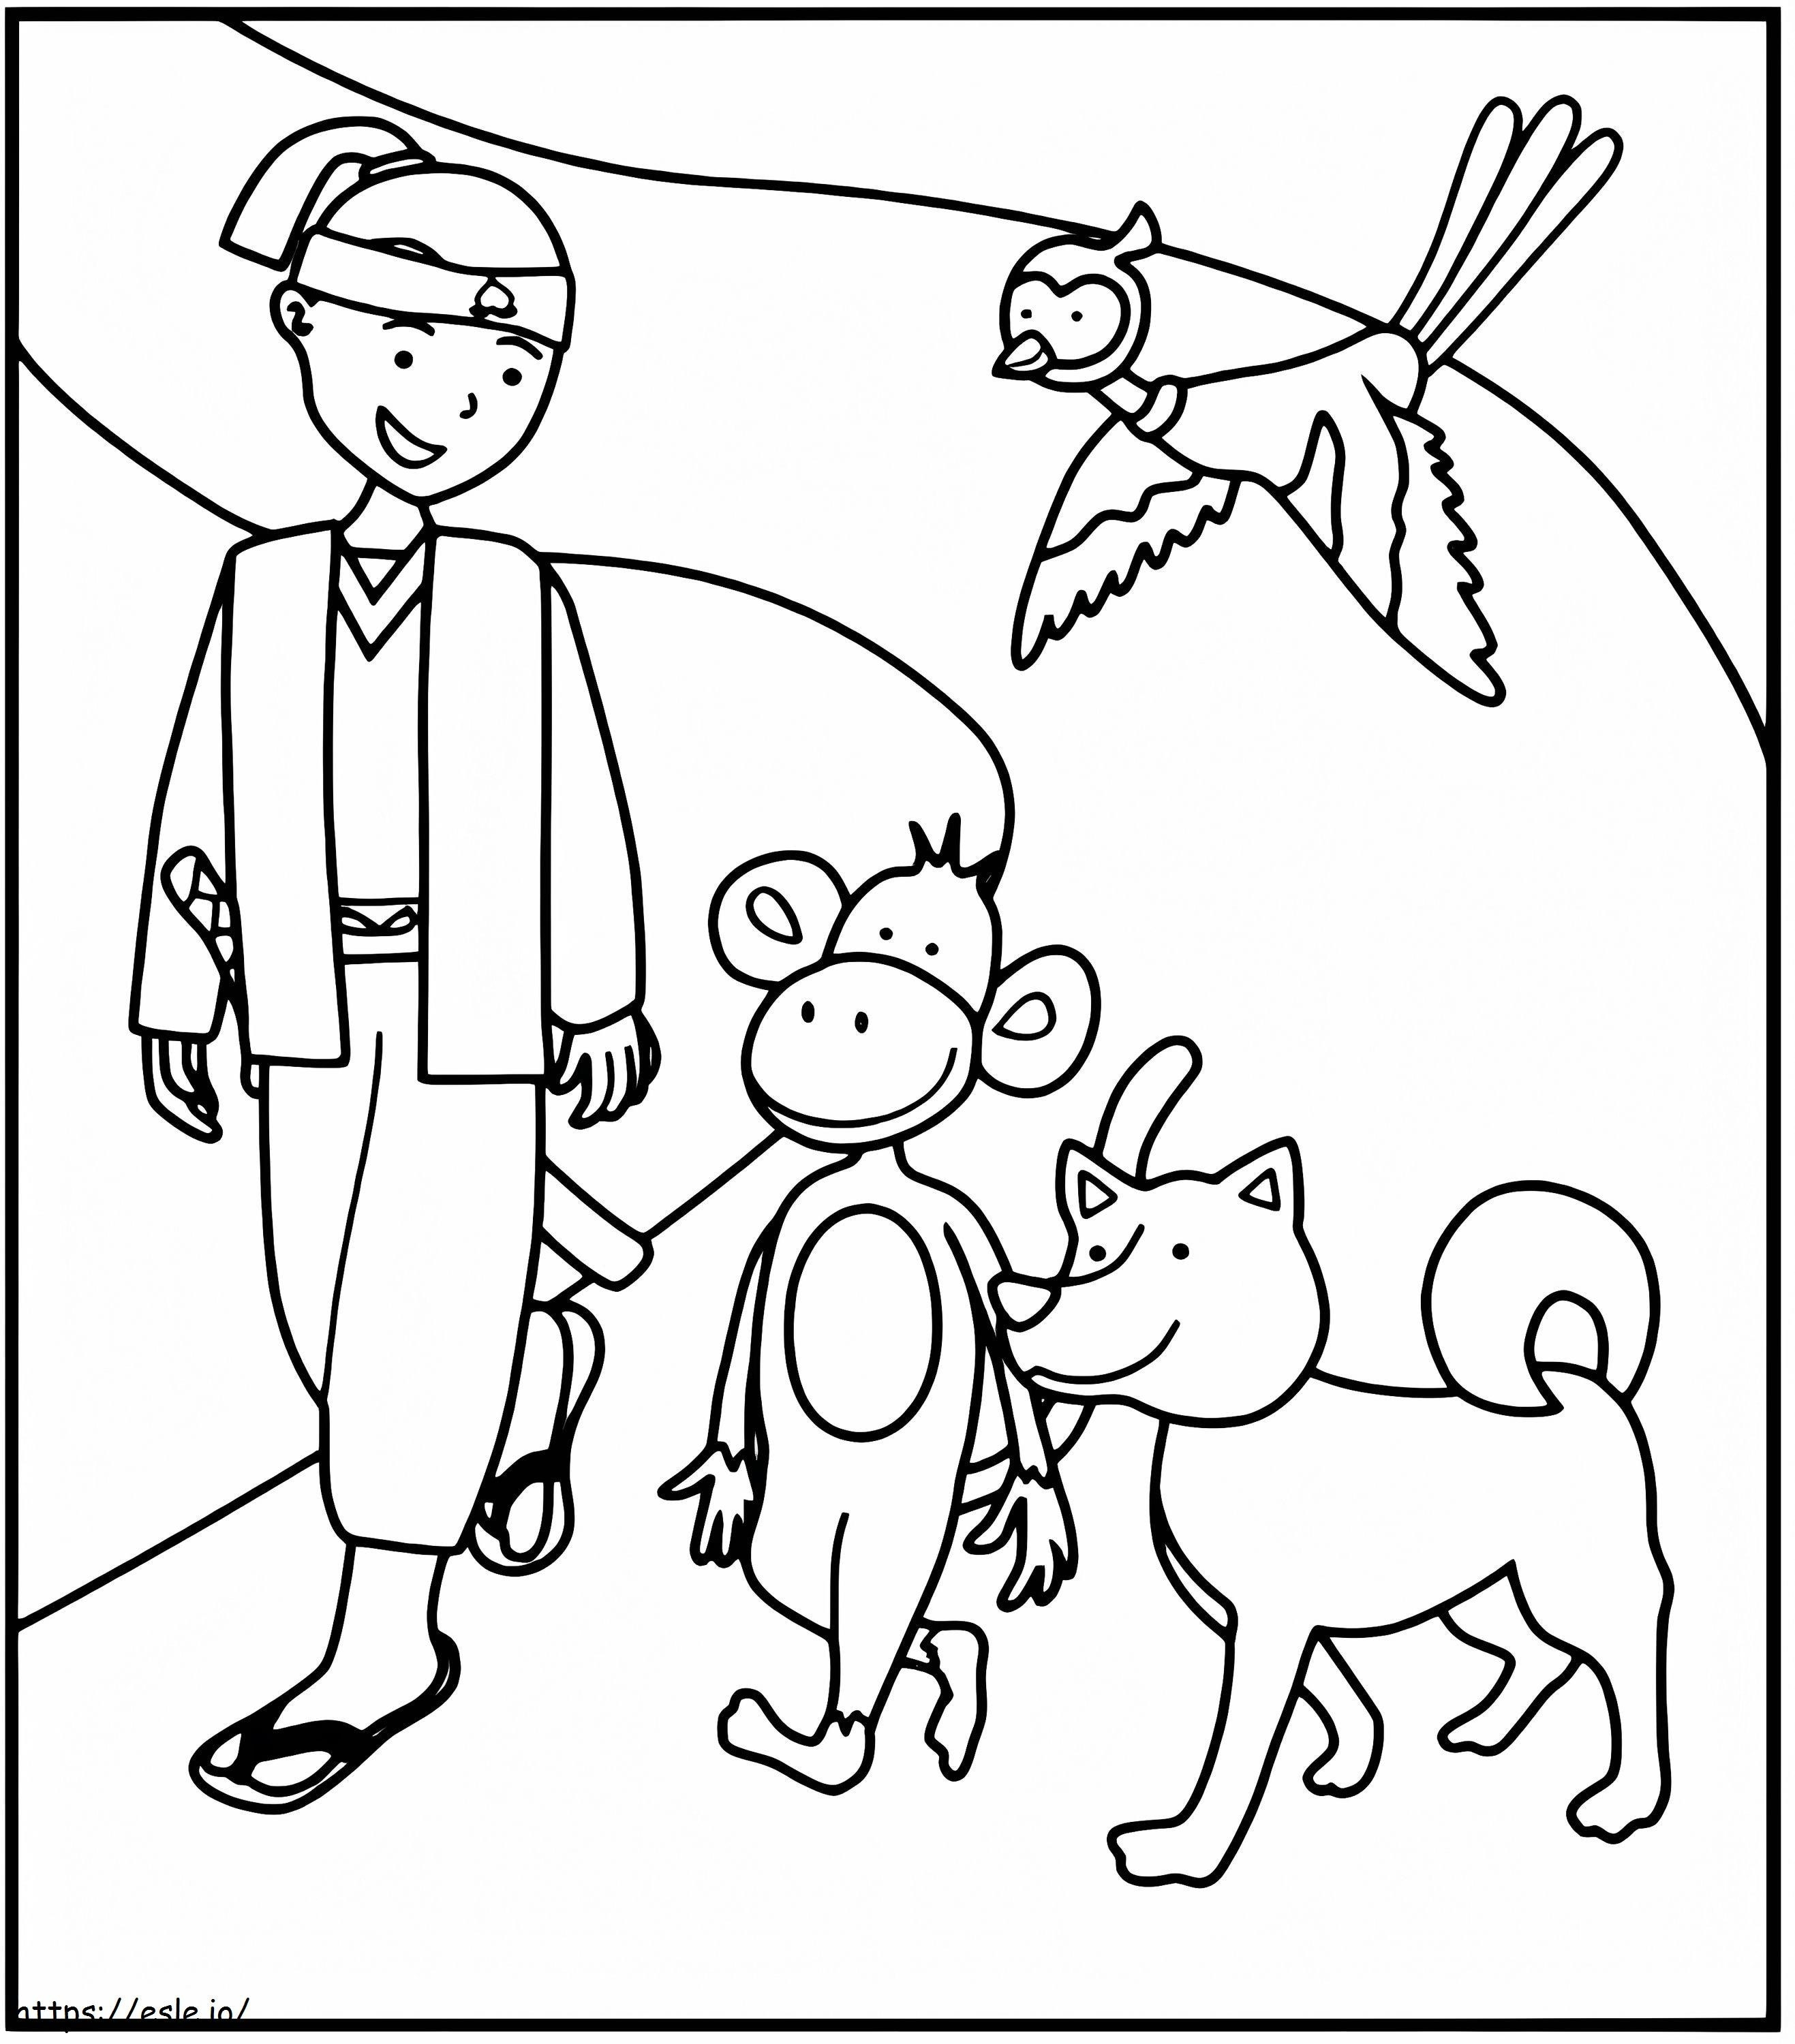 Momotaro And Animals coloring page